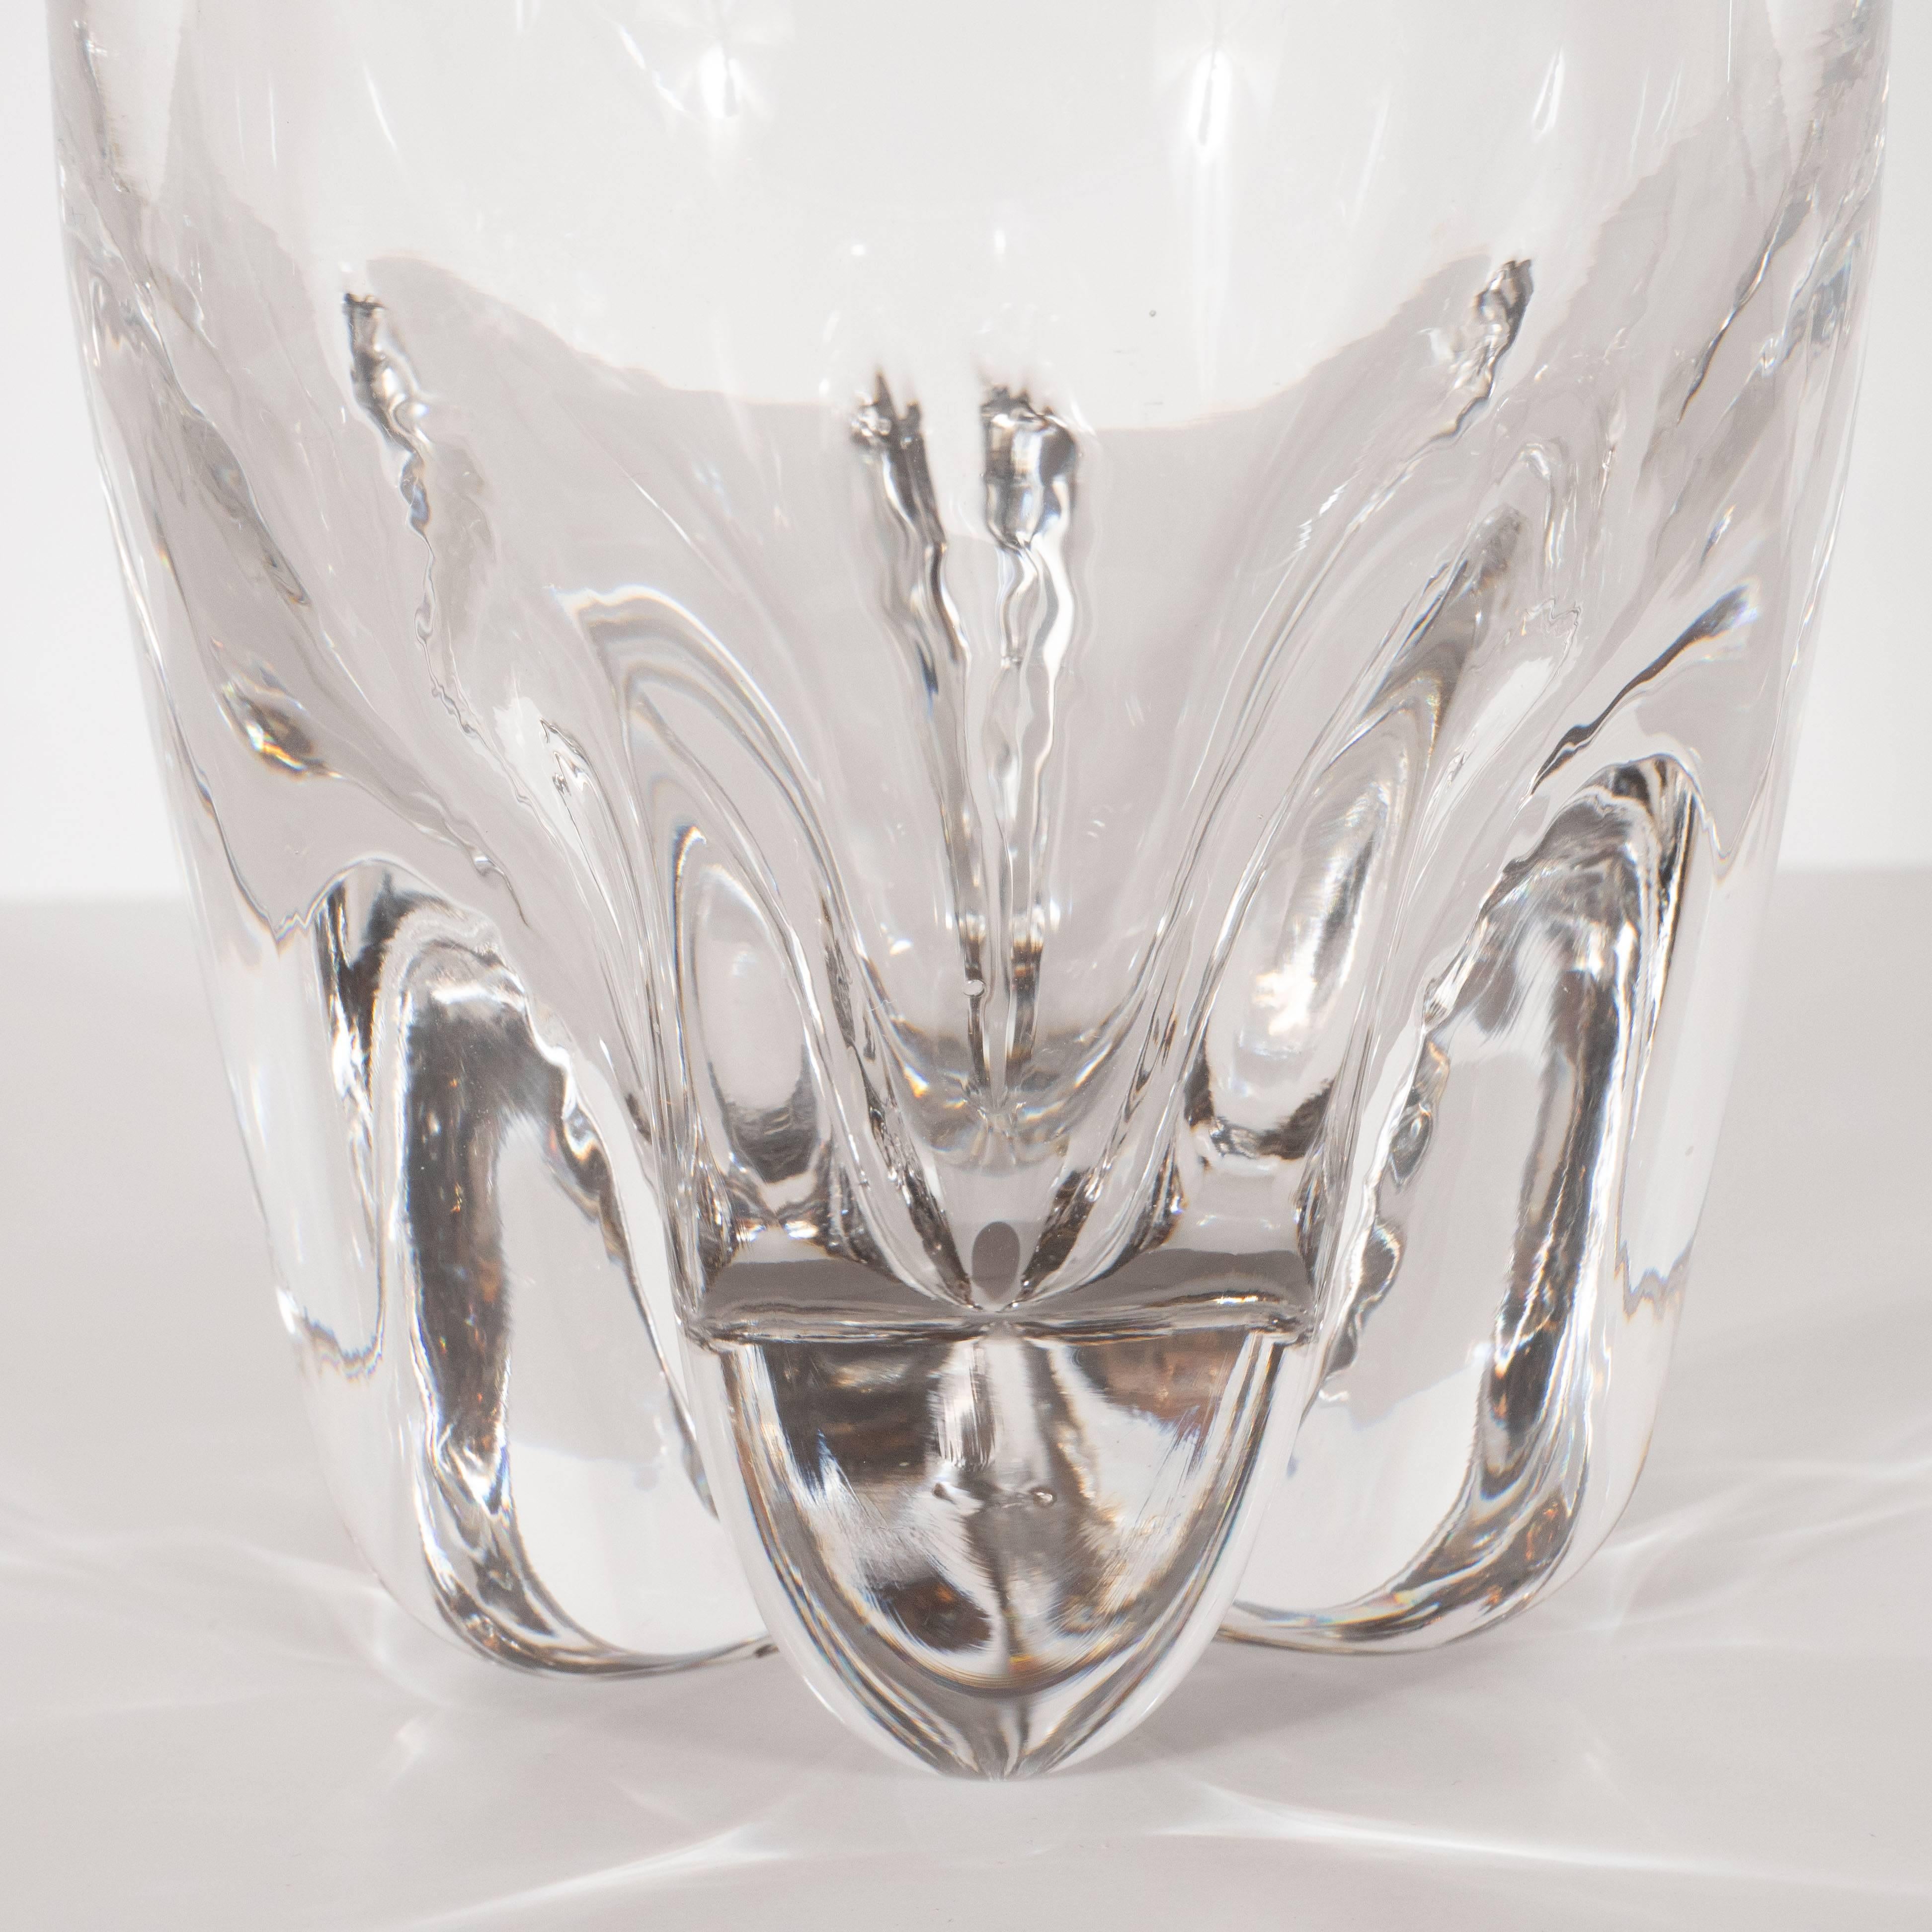 Swedish Sculptural Scandinavian Mid-Century Modern Handblown Translucent Glass Vase For Sale